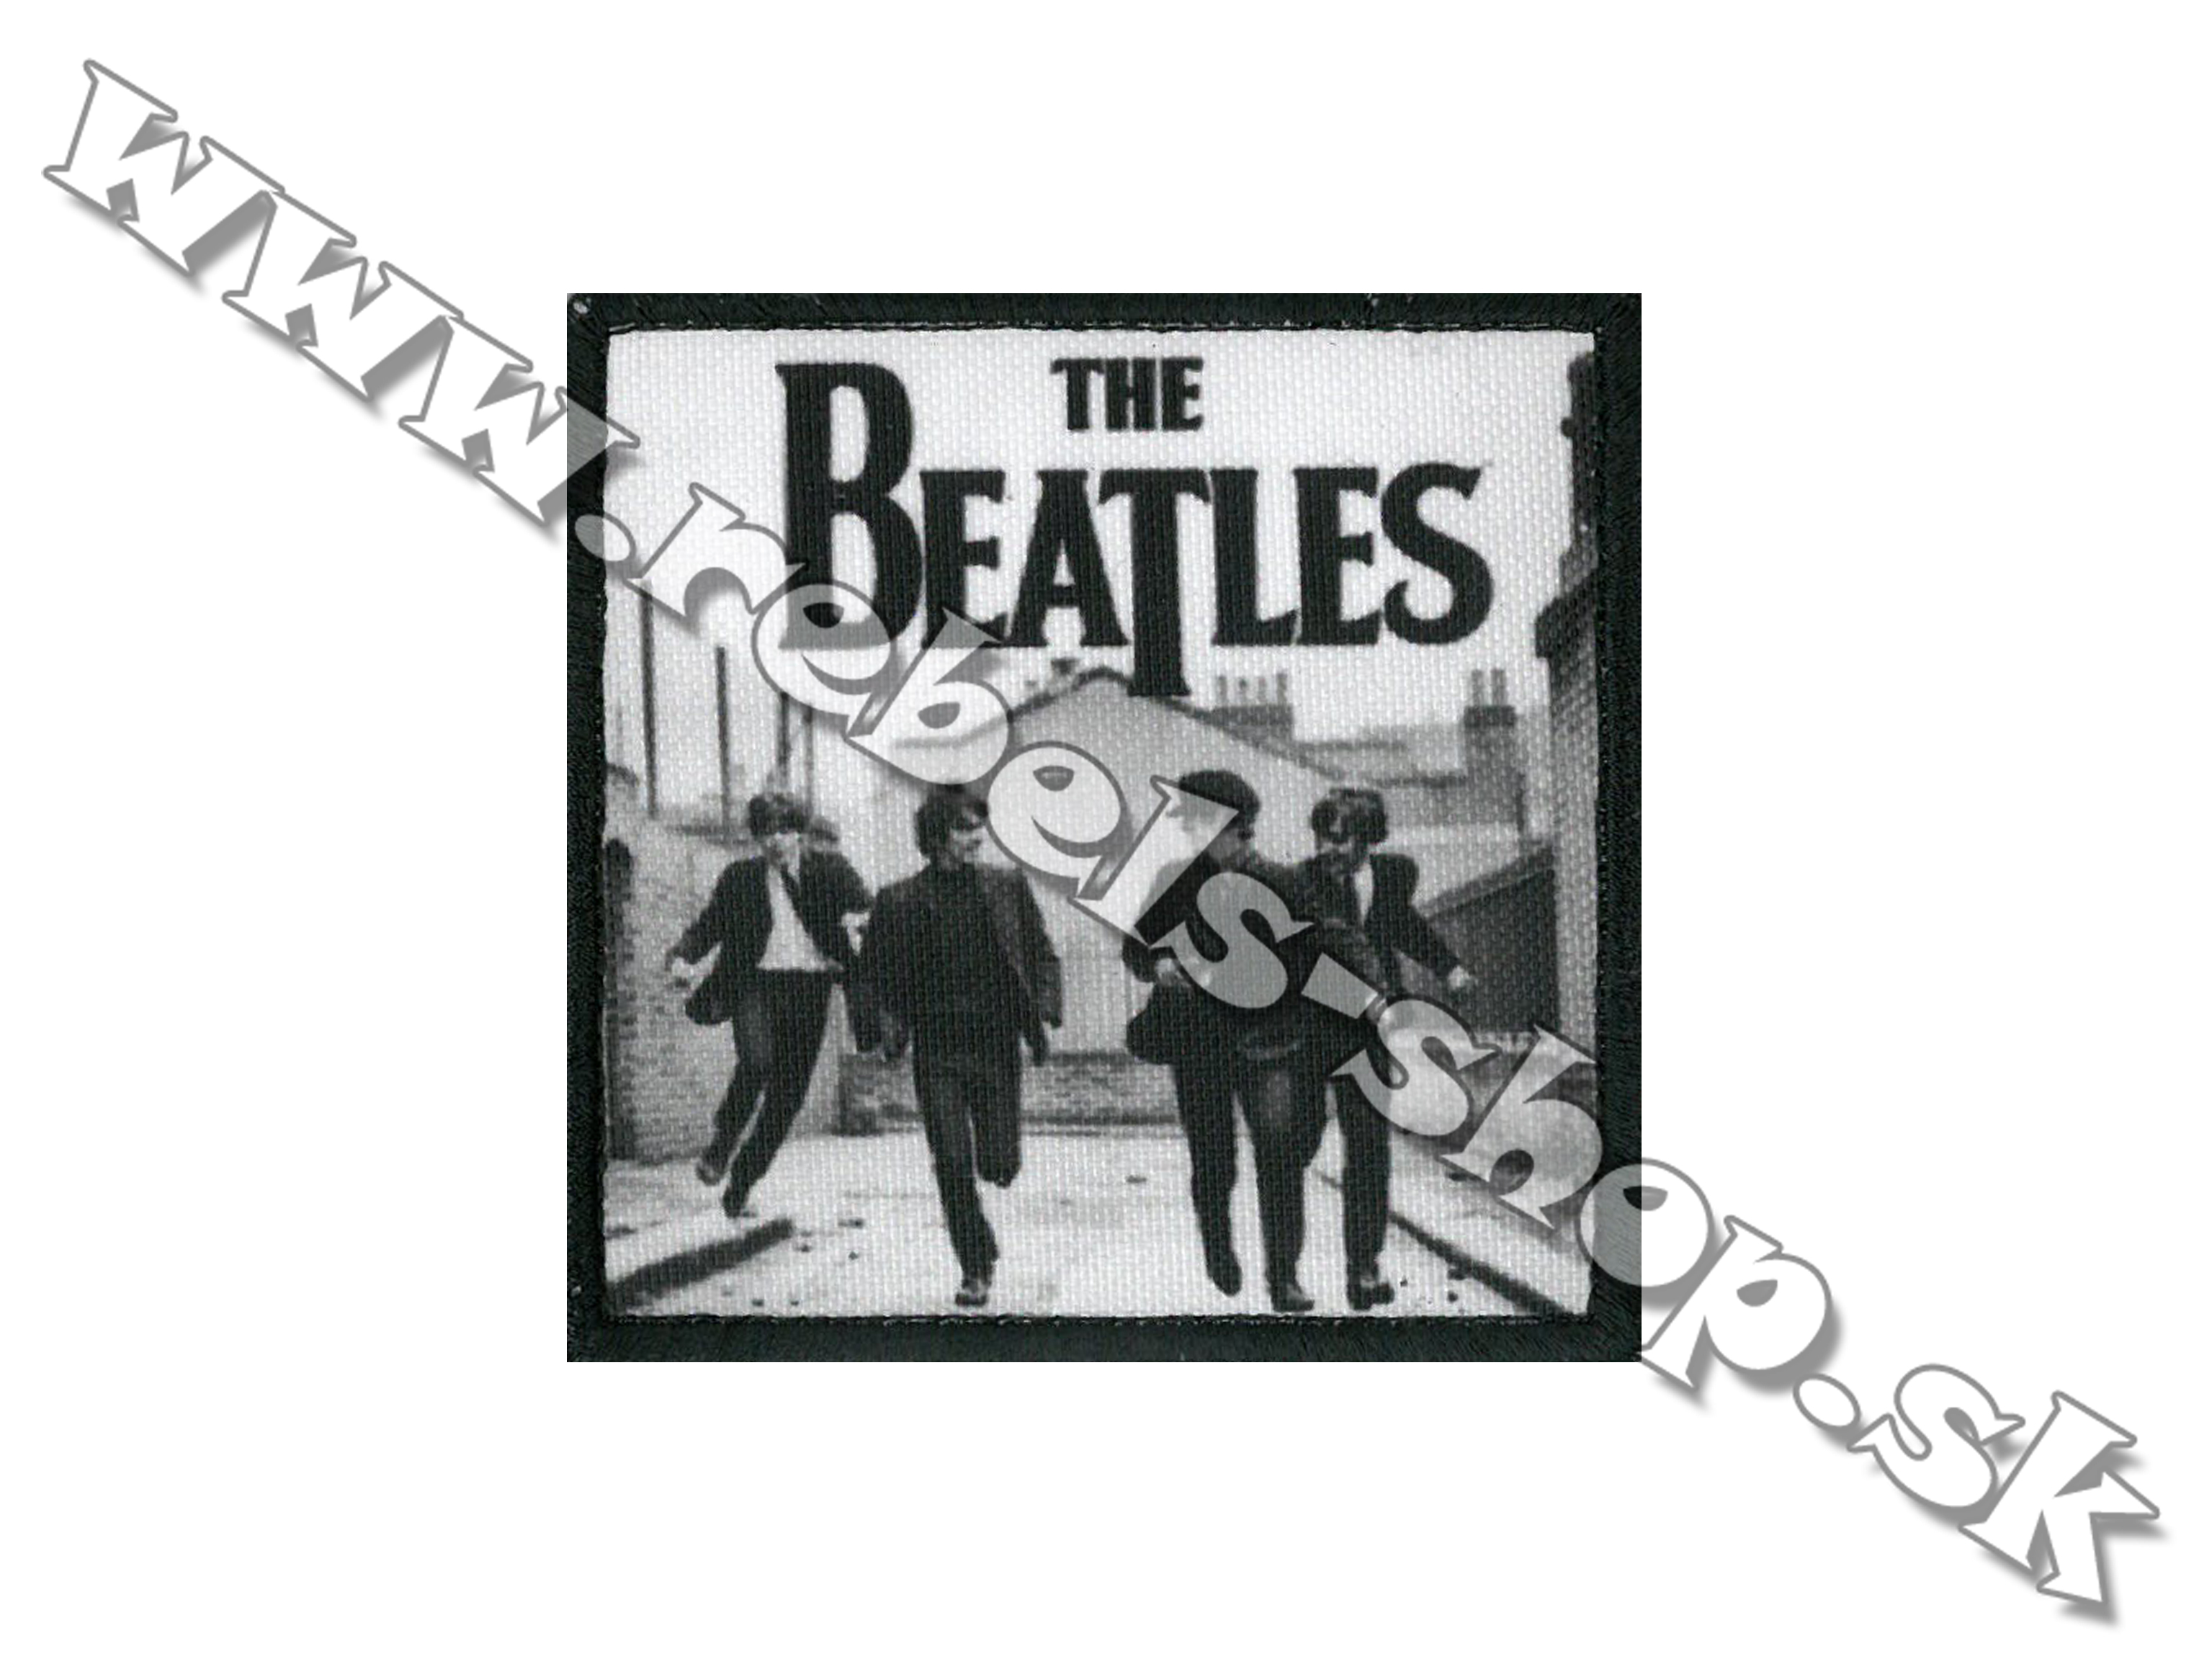 Nášivka "The Beatles"